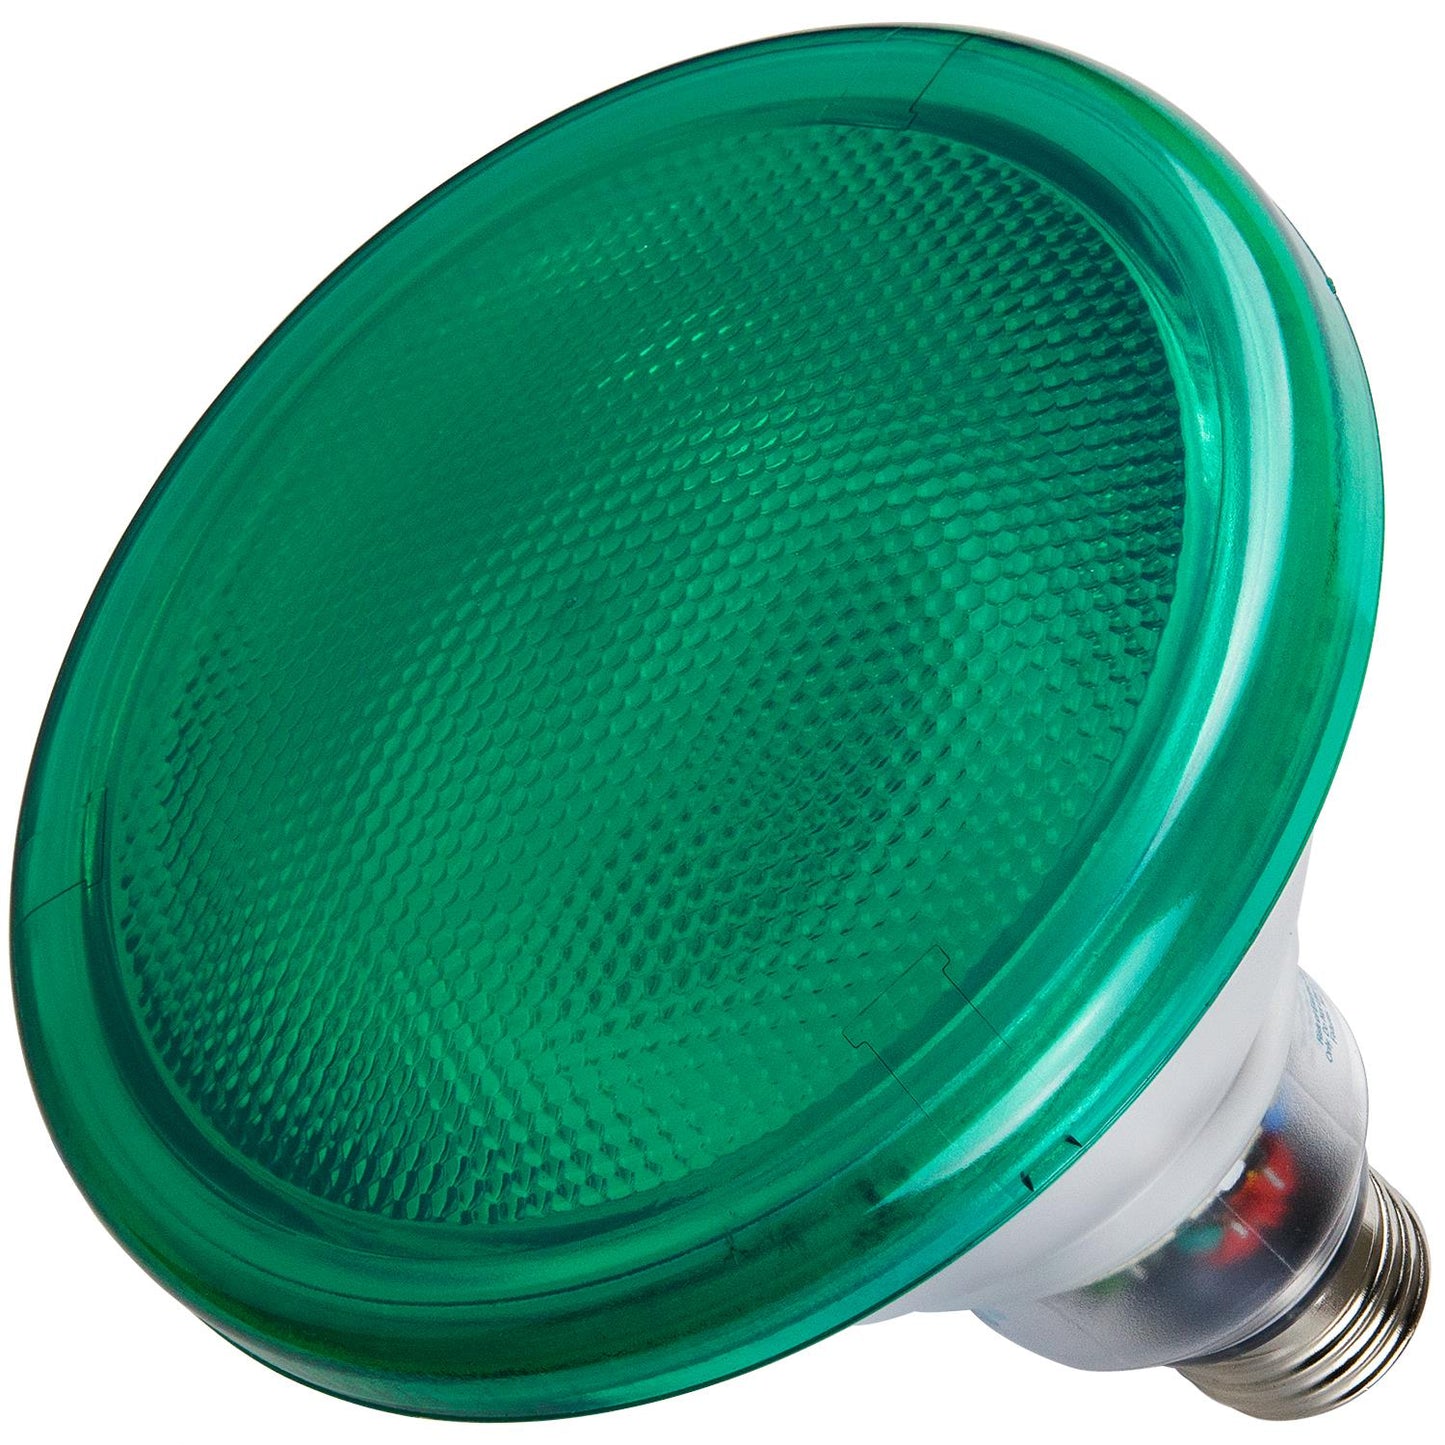 Sunlite 23 Watt Colored PAR38 Reflector, Medium Base, Green